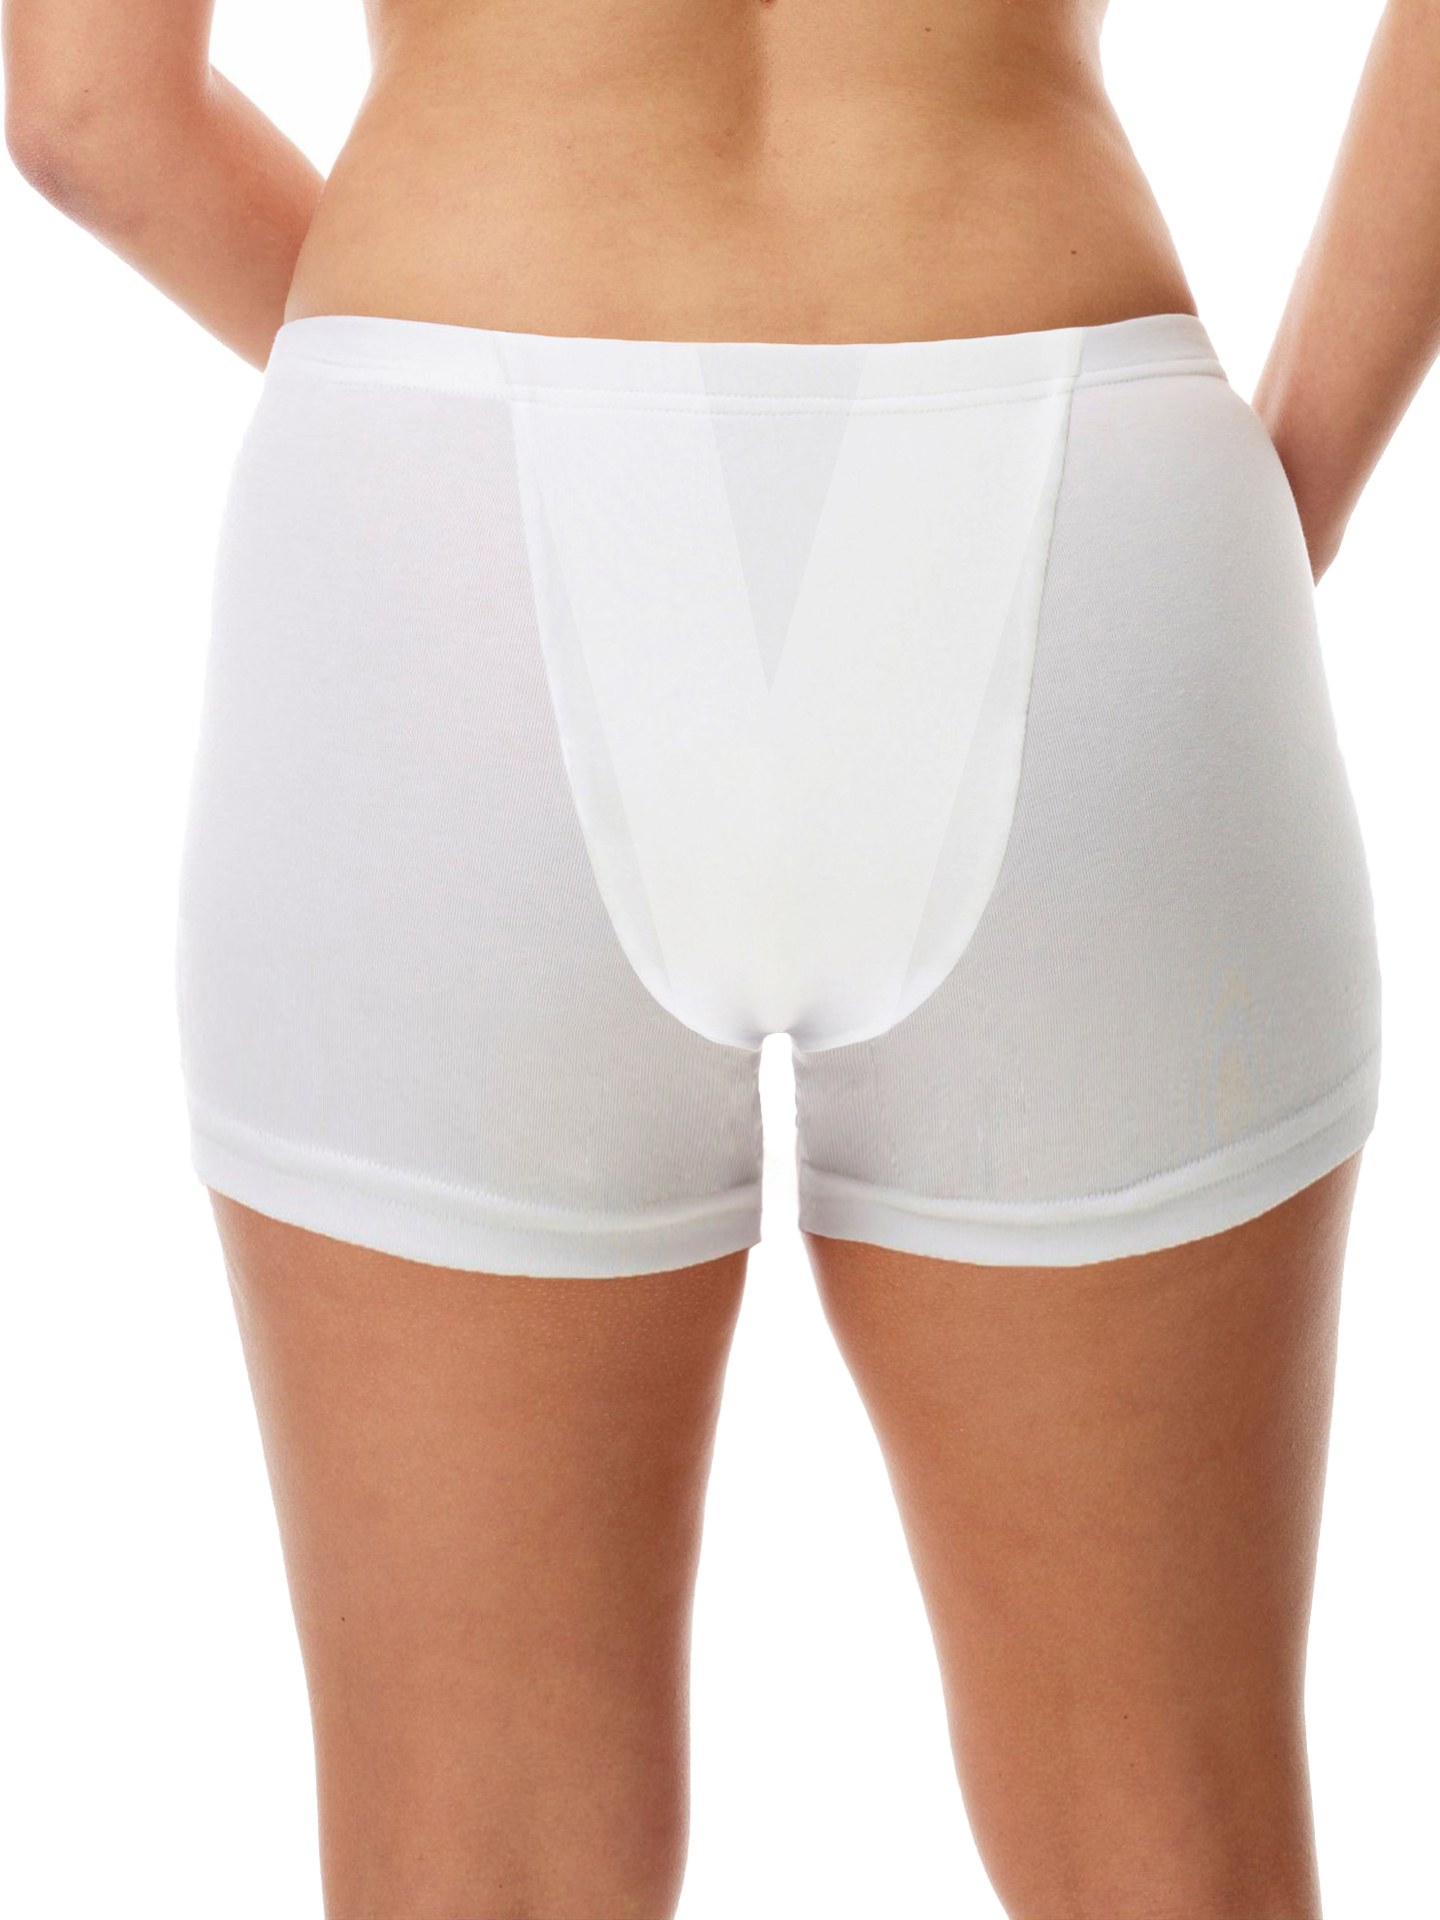 Underworks Vulvar Varicosity and Prolapse Support Garments 